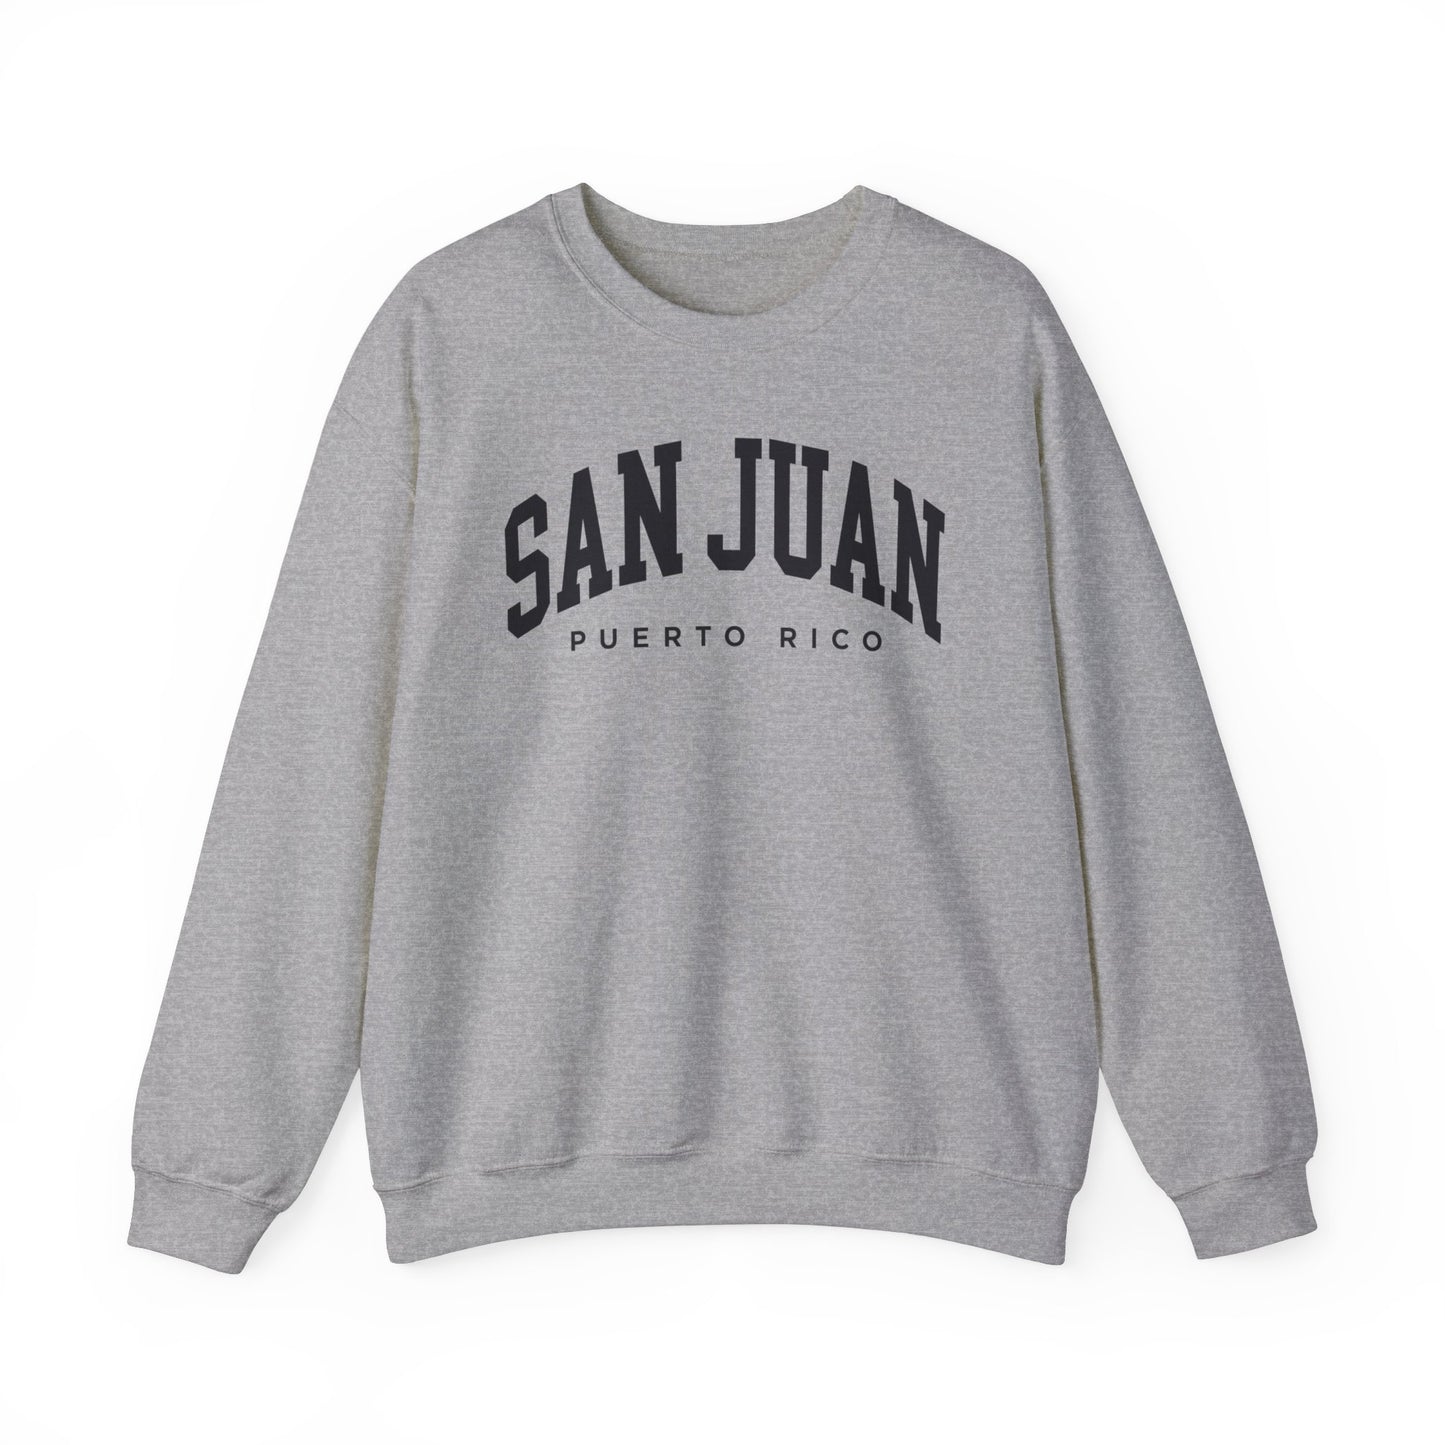 San Juan Puerto Rico Sweatshirt